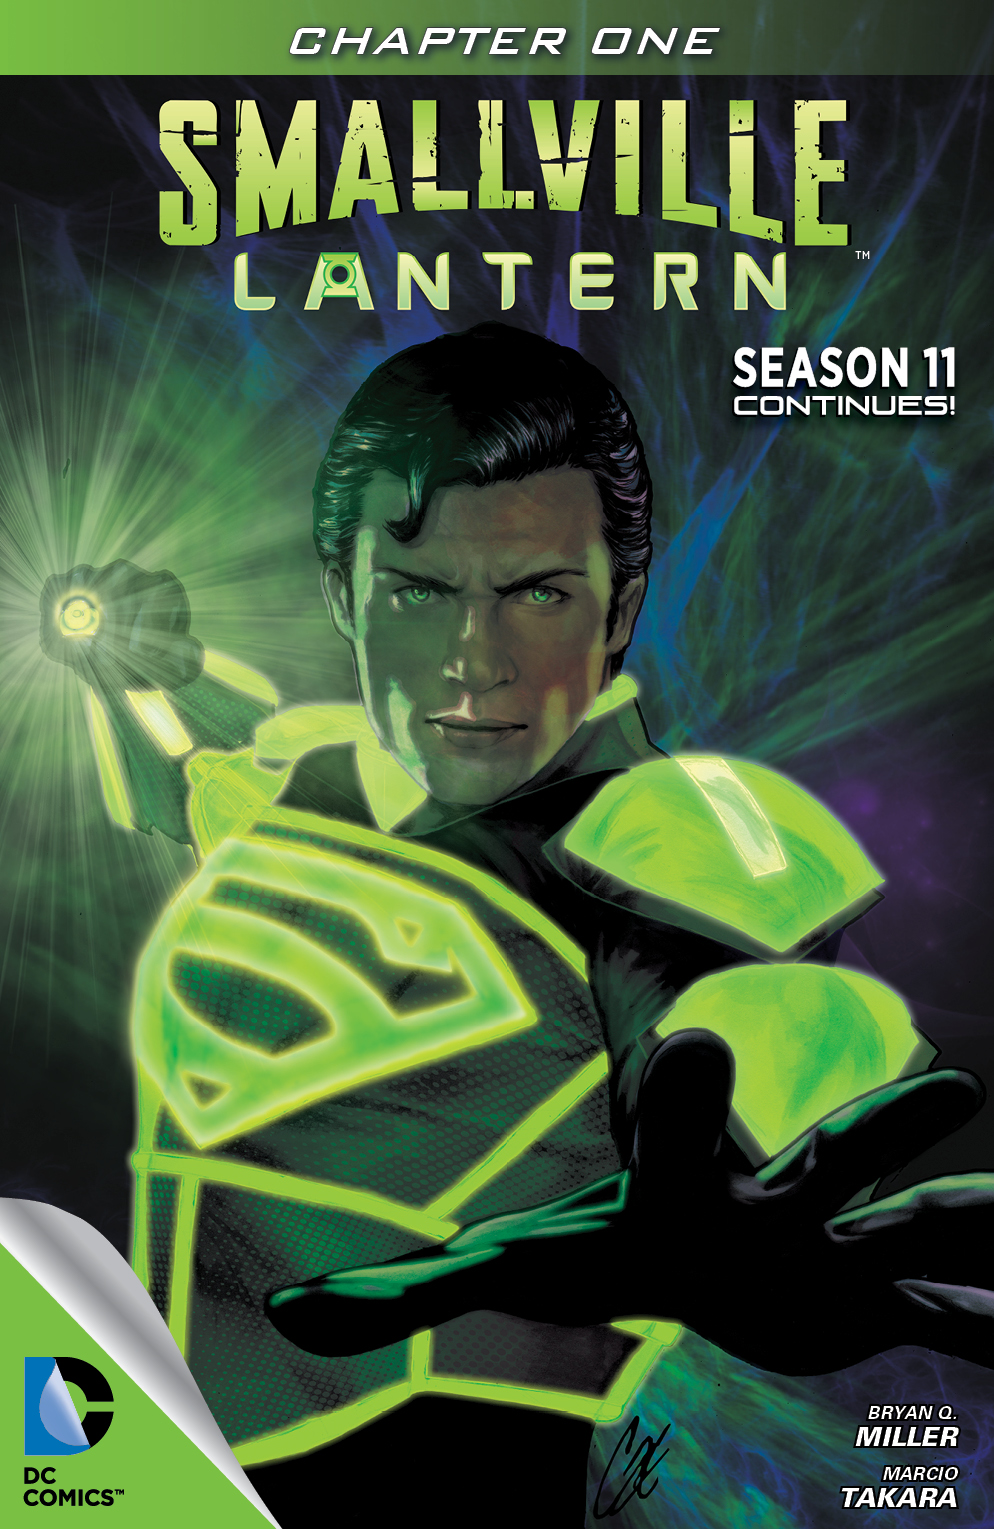 Smallville Season 11: Lantern #1 preview images